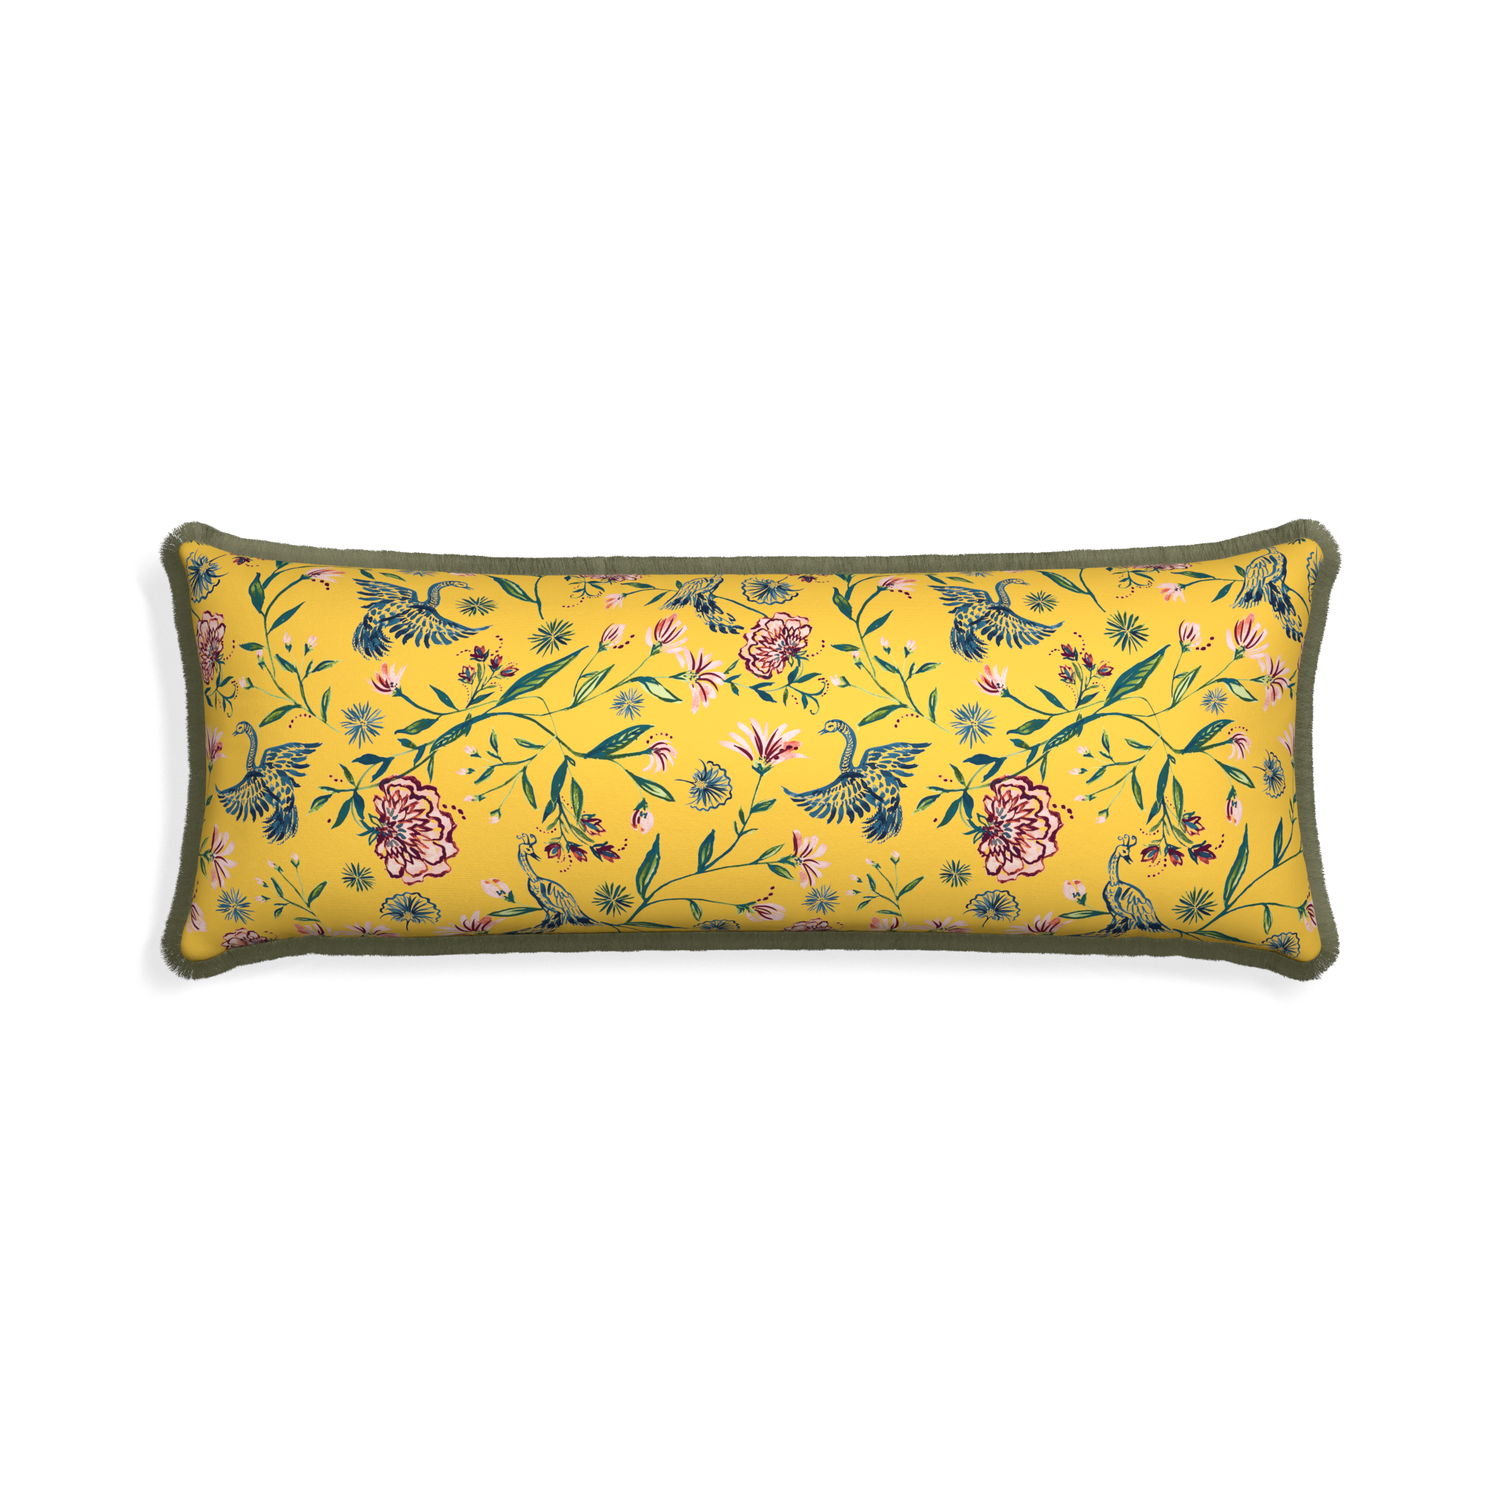 Xl-lumbar daphne canary custom pillow with sage fringe on white background